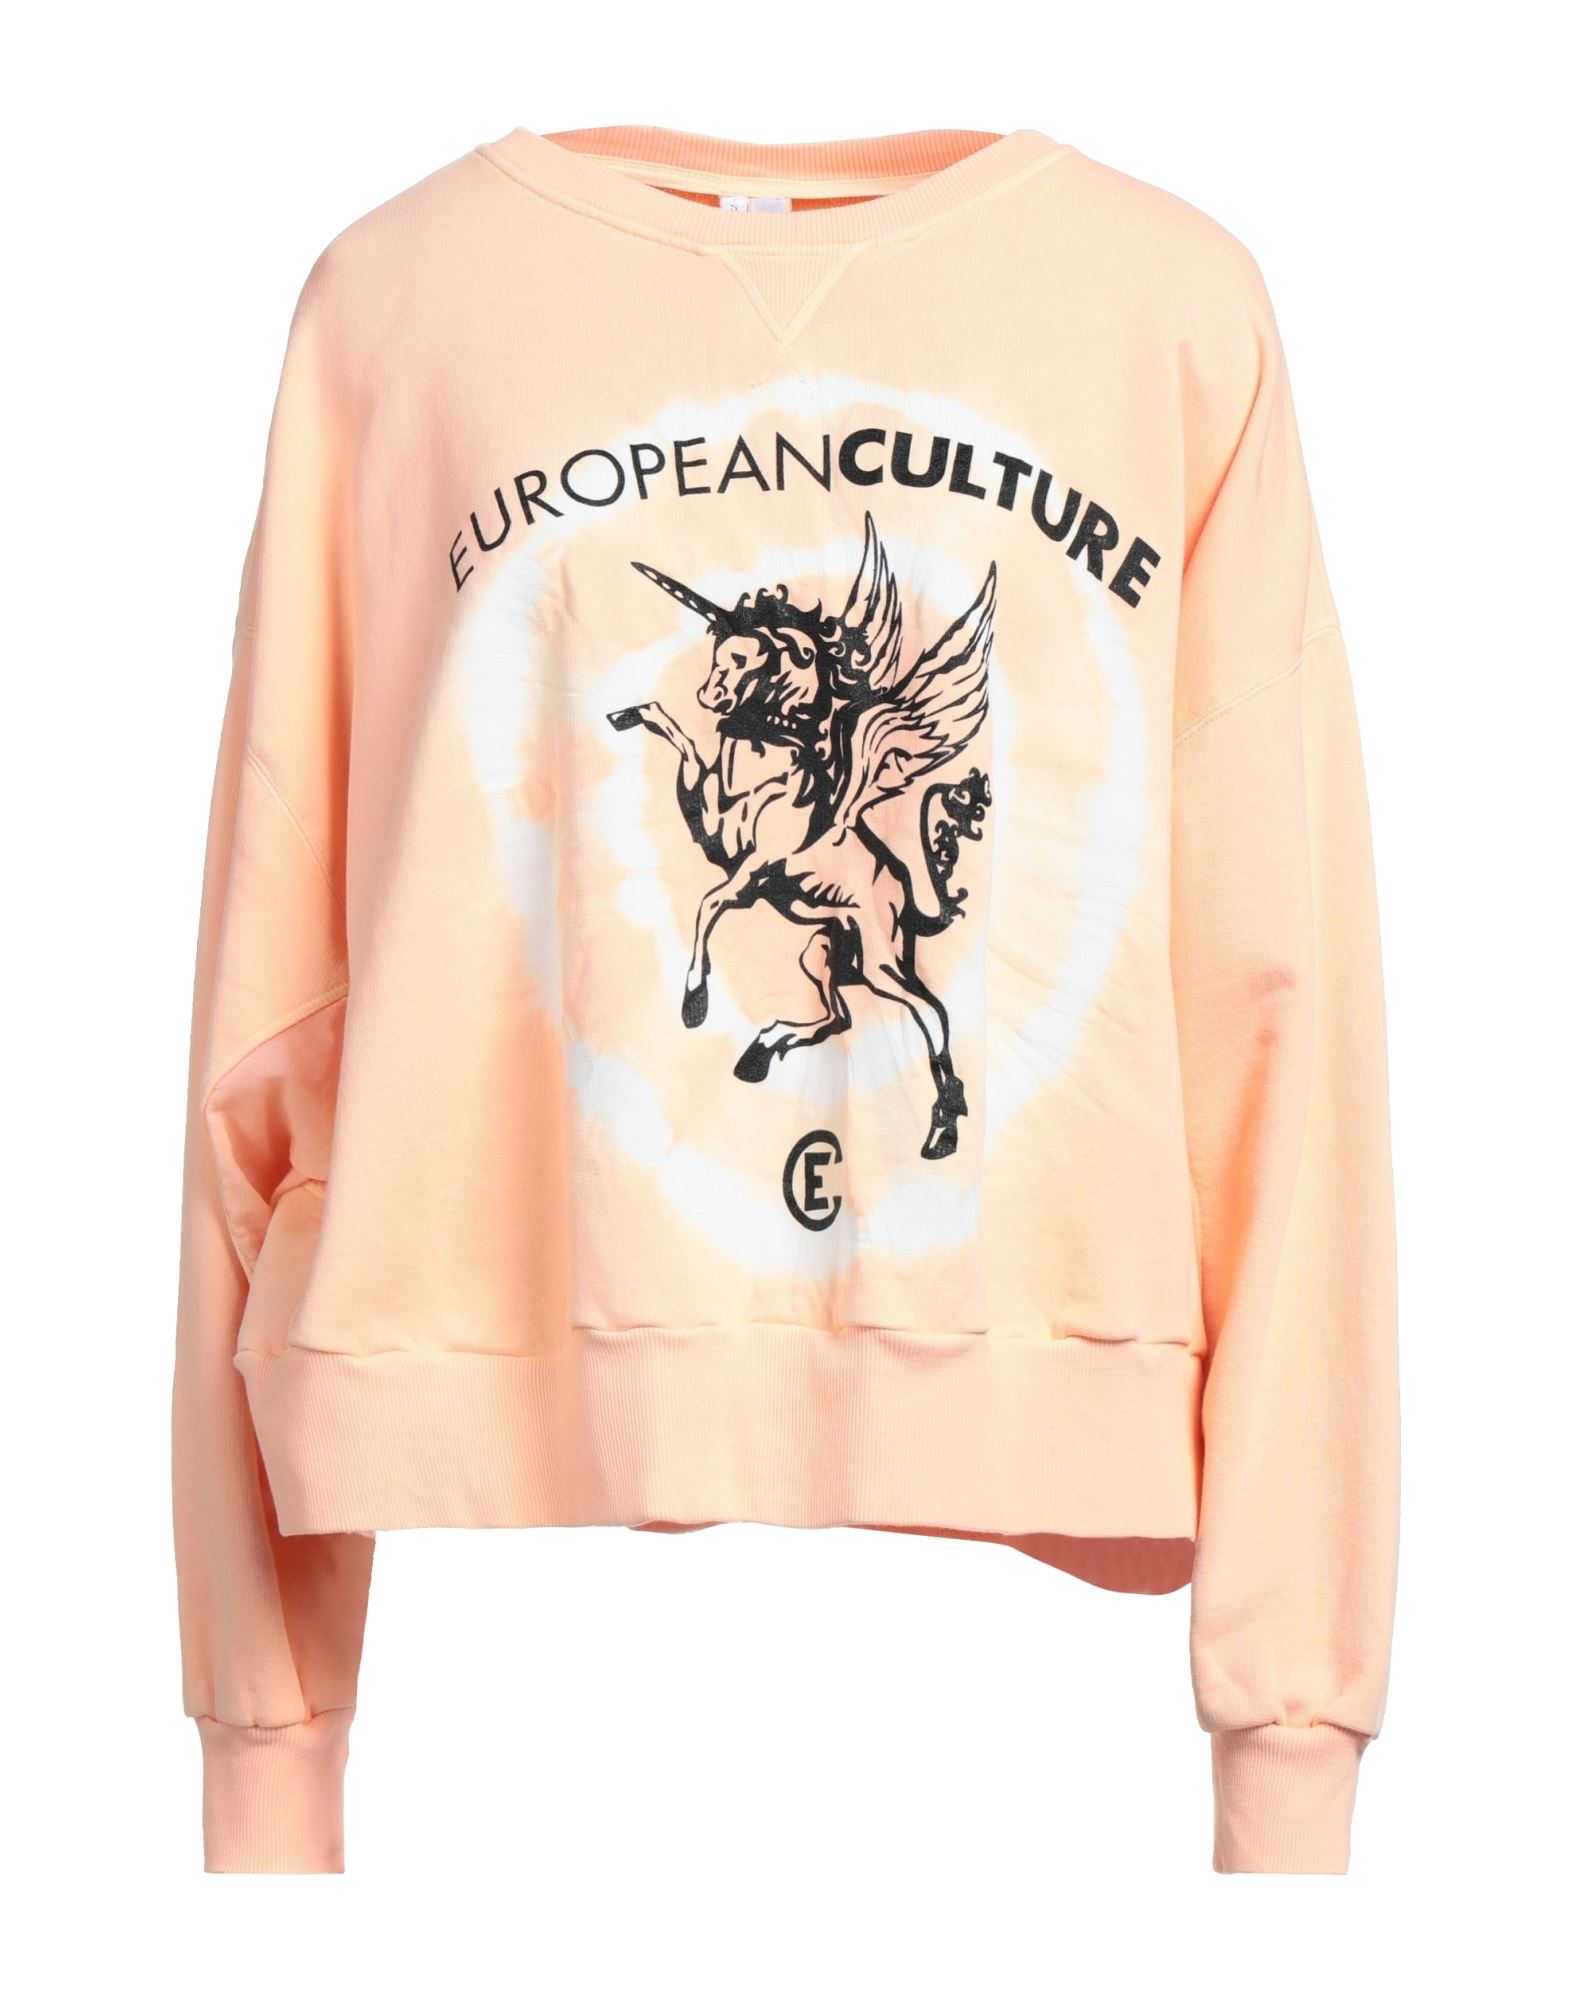 EUROPEAN CULTURE Sweatshirt Damen Pfirsich von EUROPEAN CULTURE